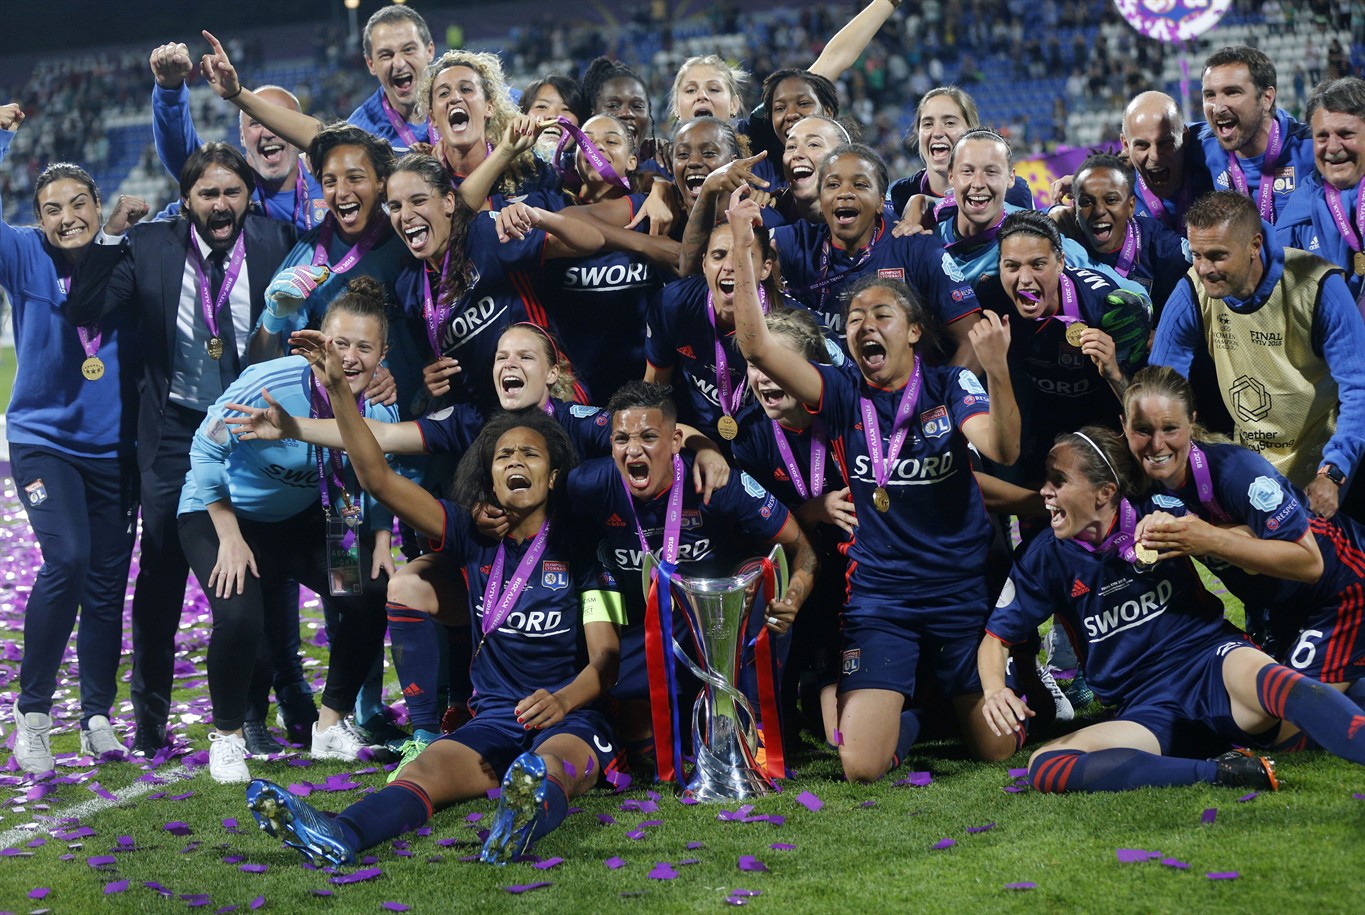 uefa women's champions league 2018